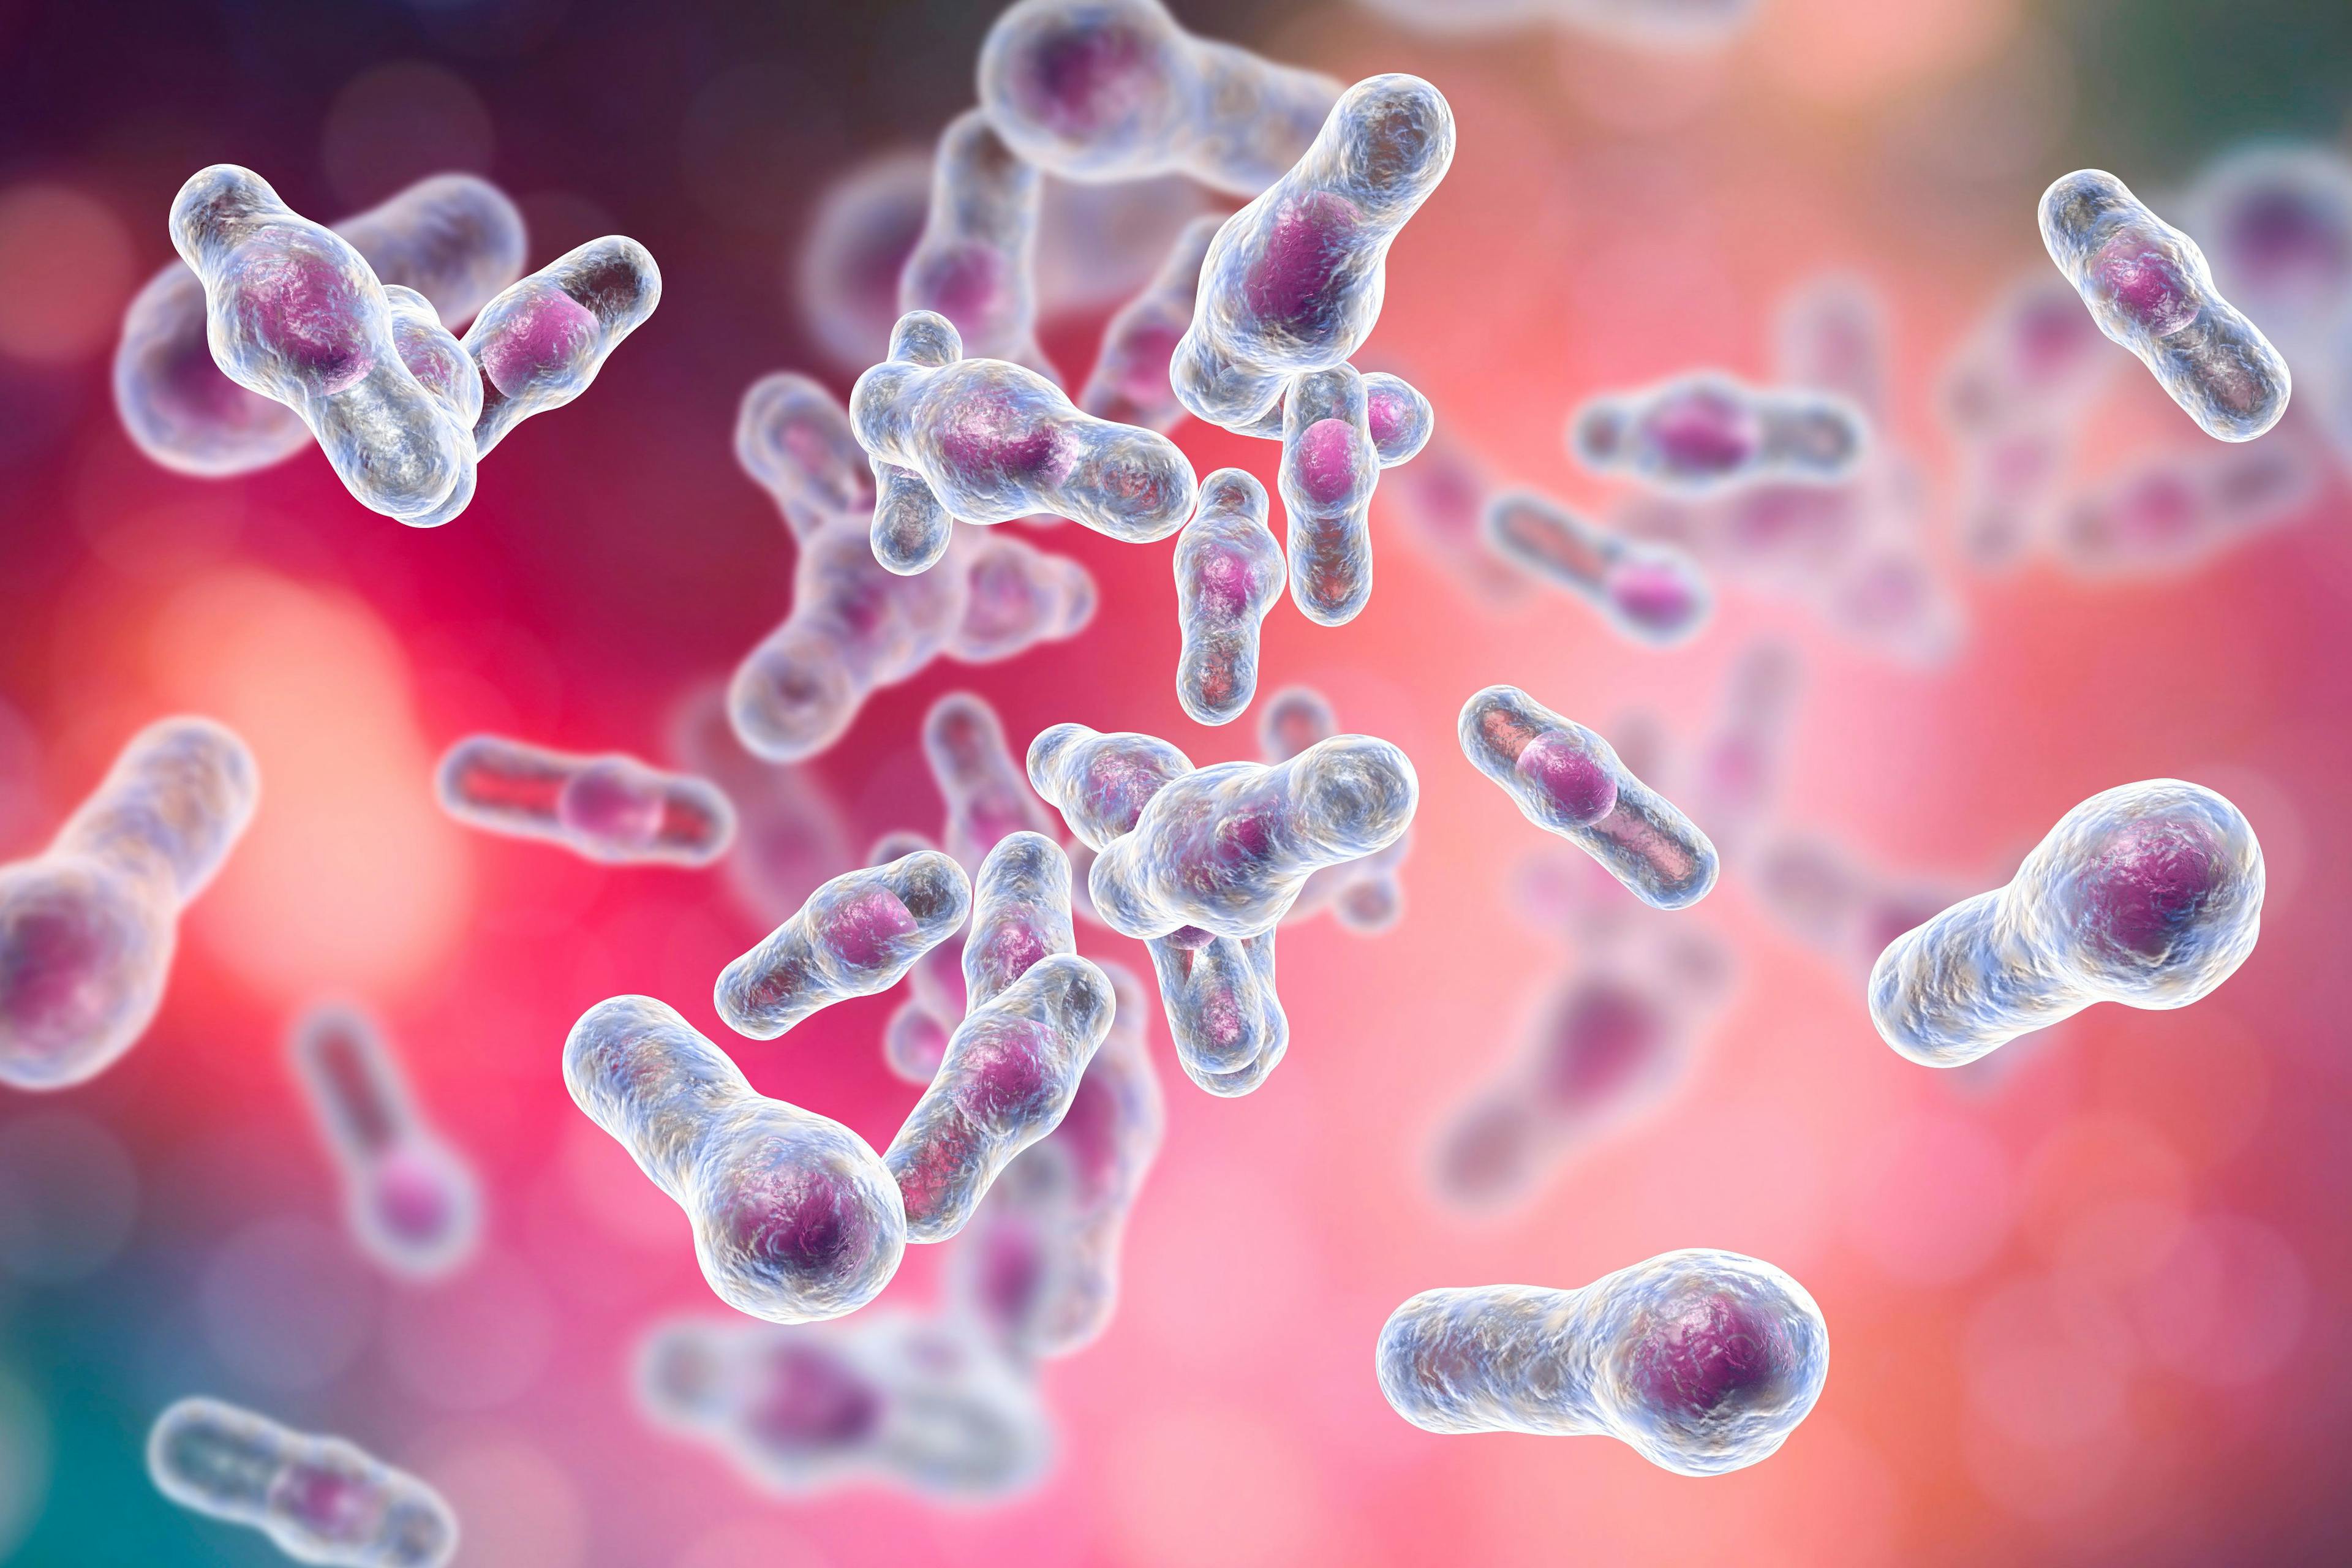 Clostridium difficile bacteria.   © Dr_Microbe - stock.adobe.com